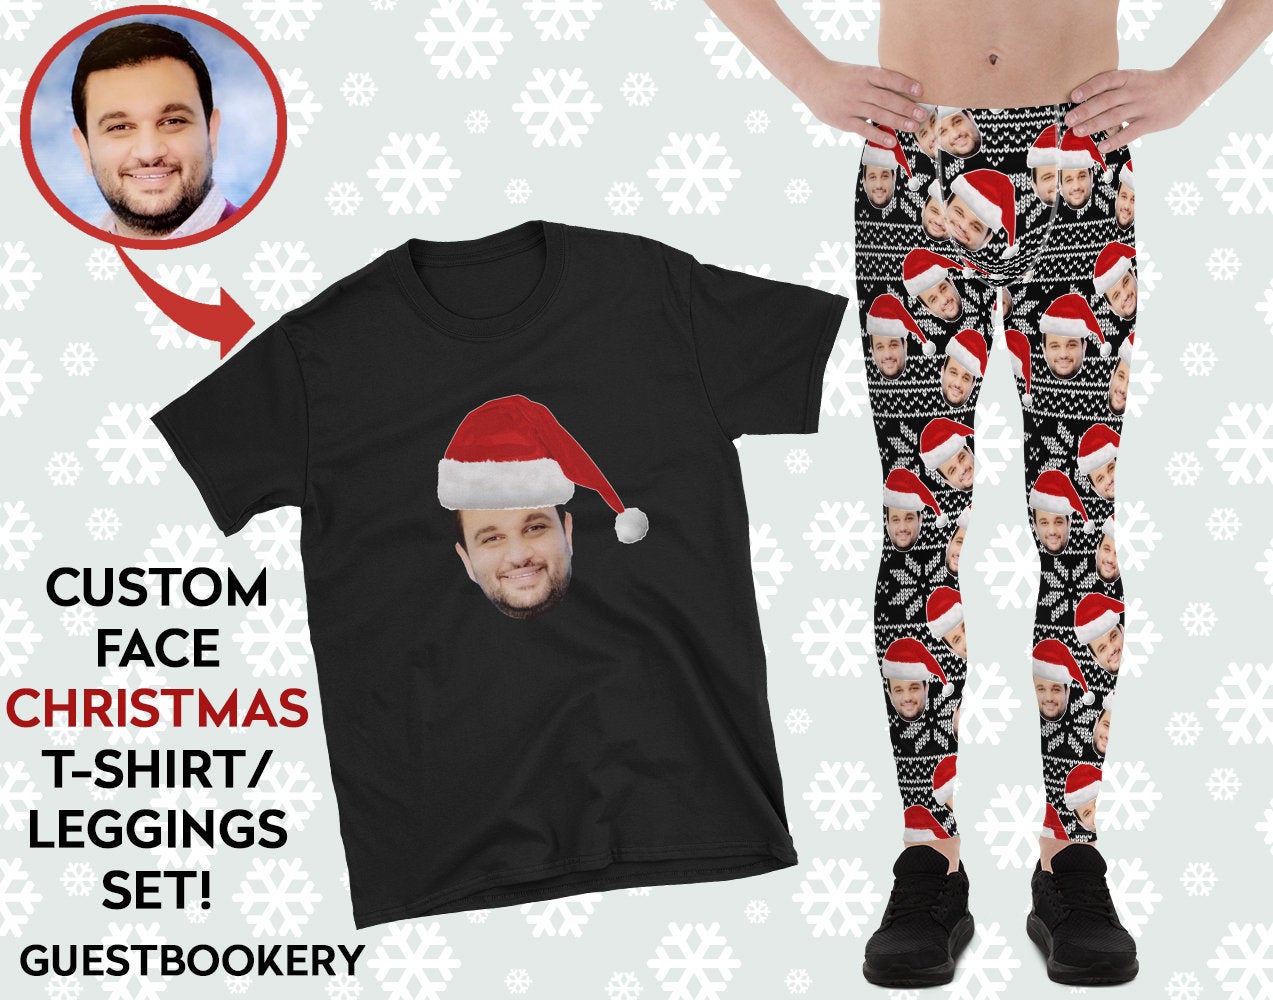 Custom Faces Leggings and Shirt CHRISTMAS SET - MALE - Black Pattern